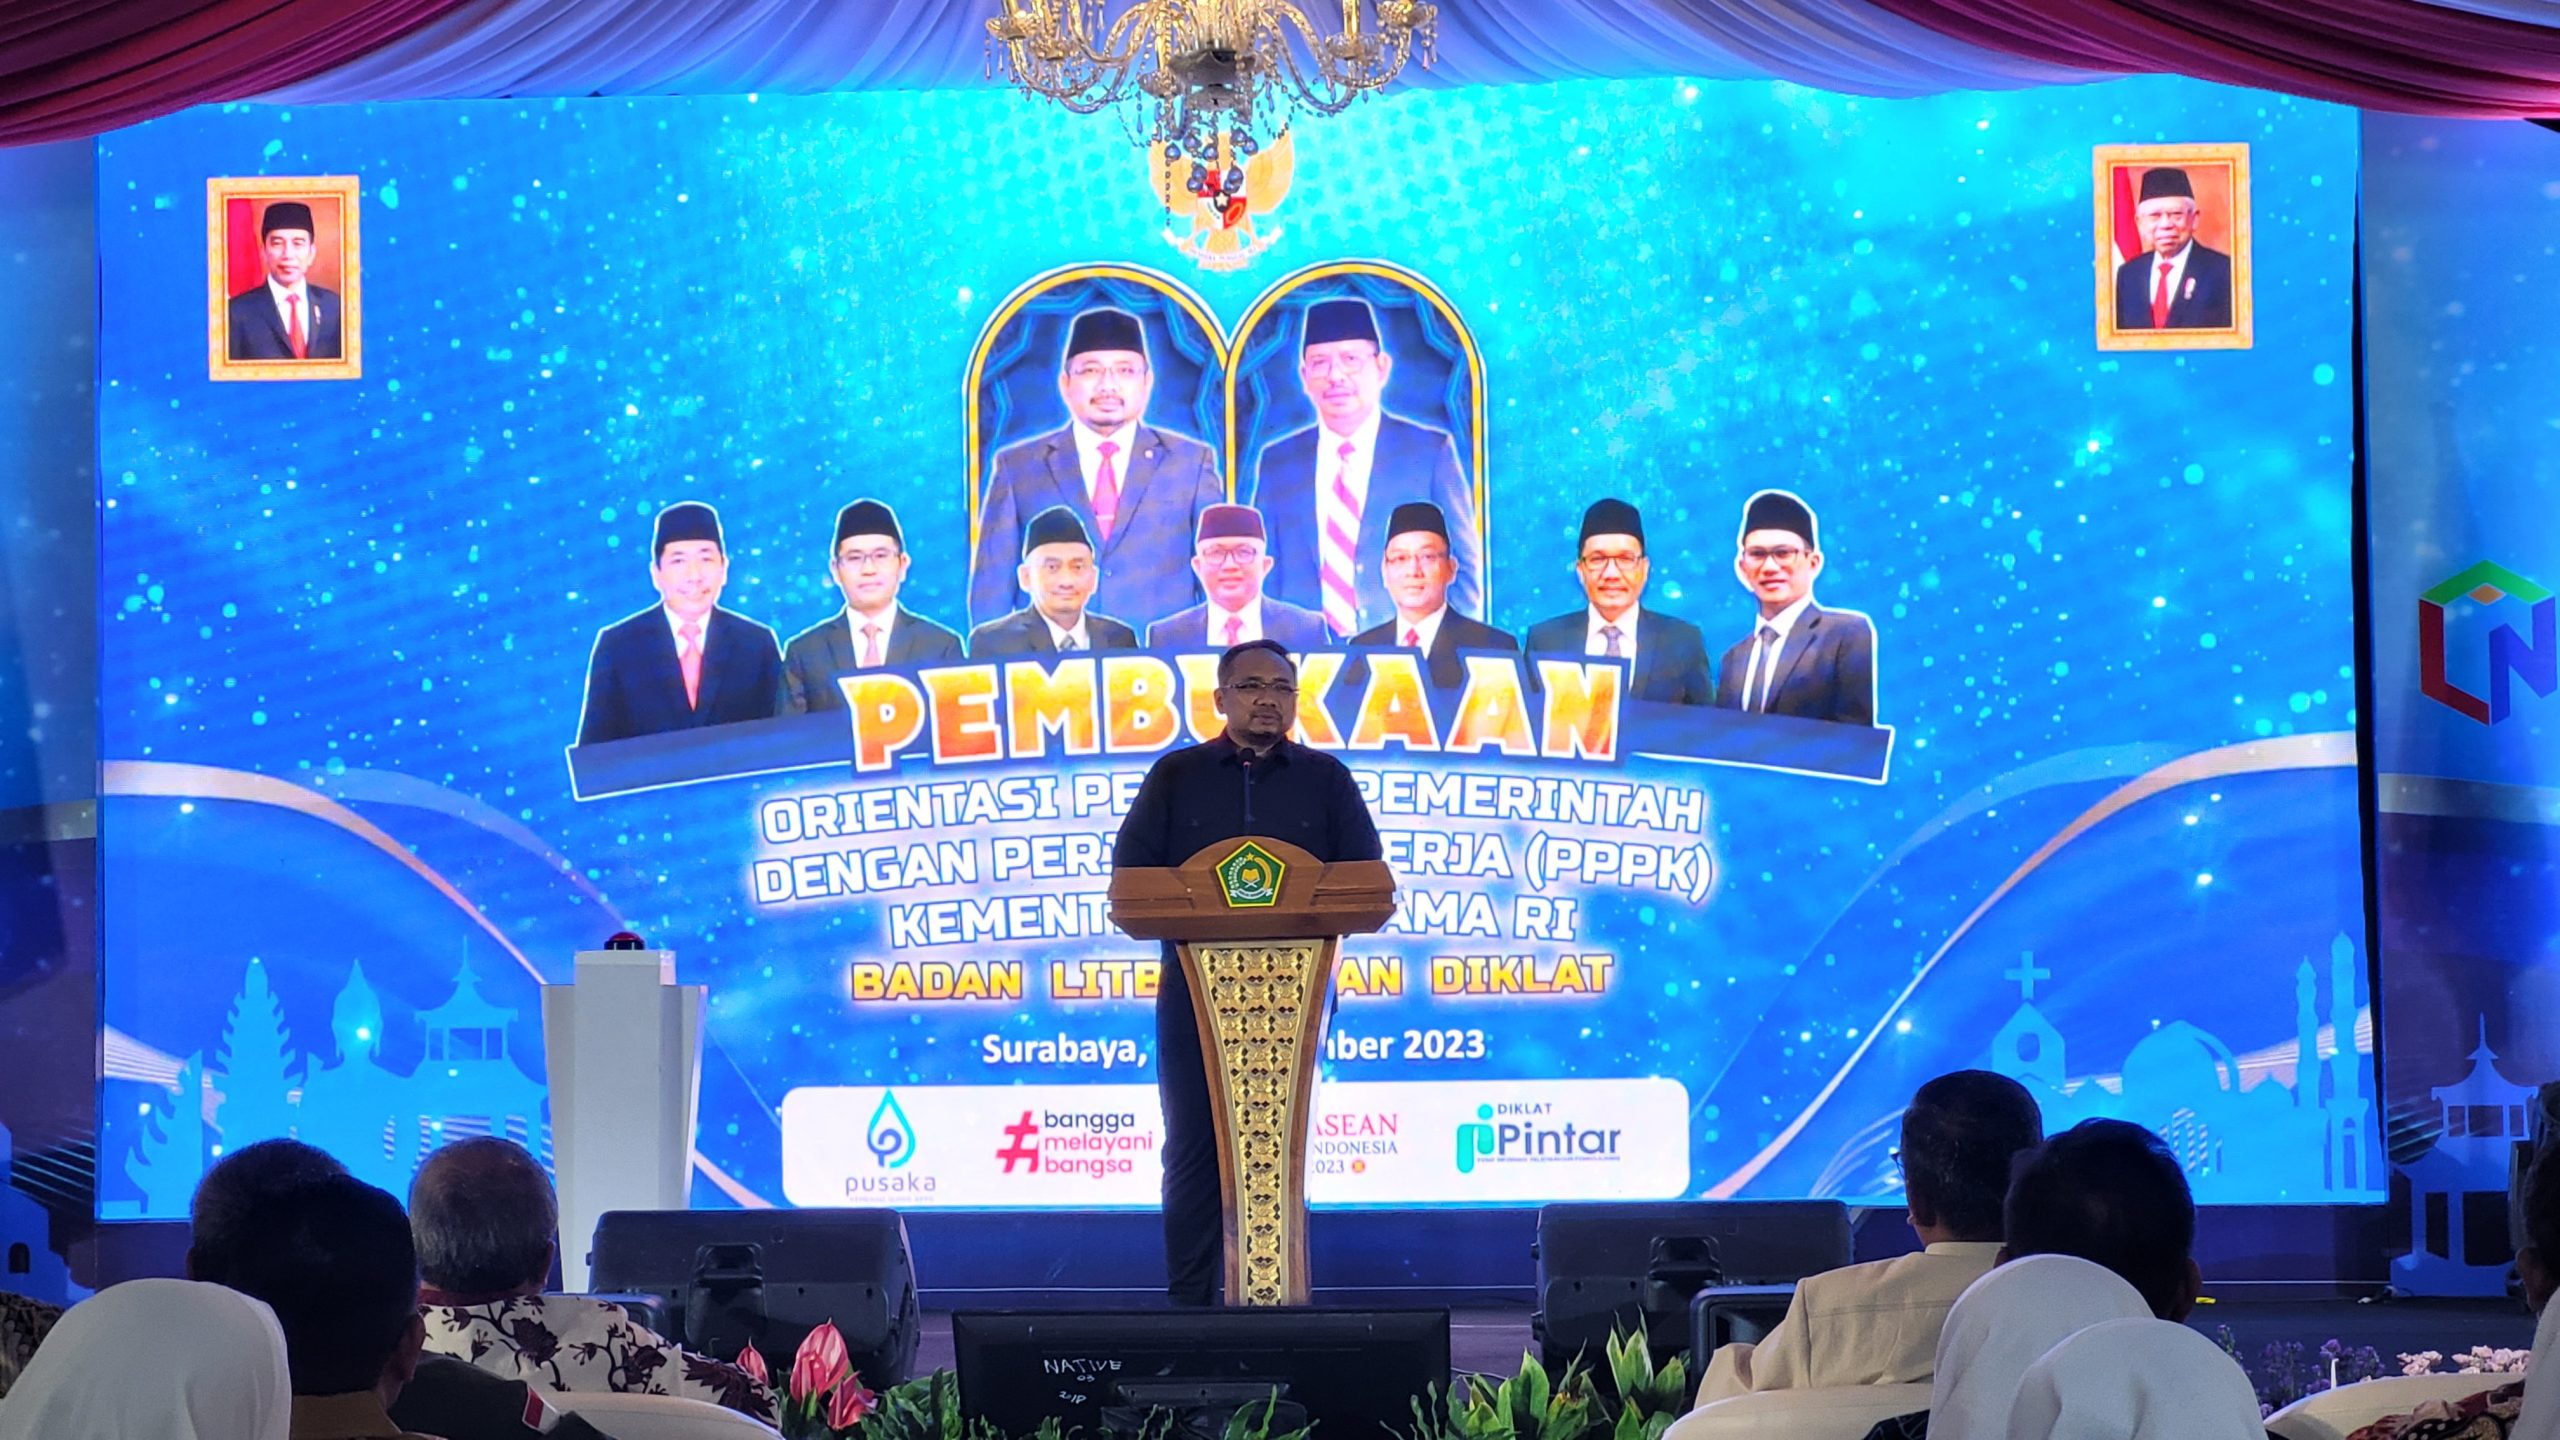 Badan Litbang dan Diklat Menyelenggarakan Acara Pembukaan Orientasi PPPK Kementerian Agama RI di BDK Surabaya